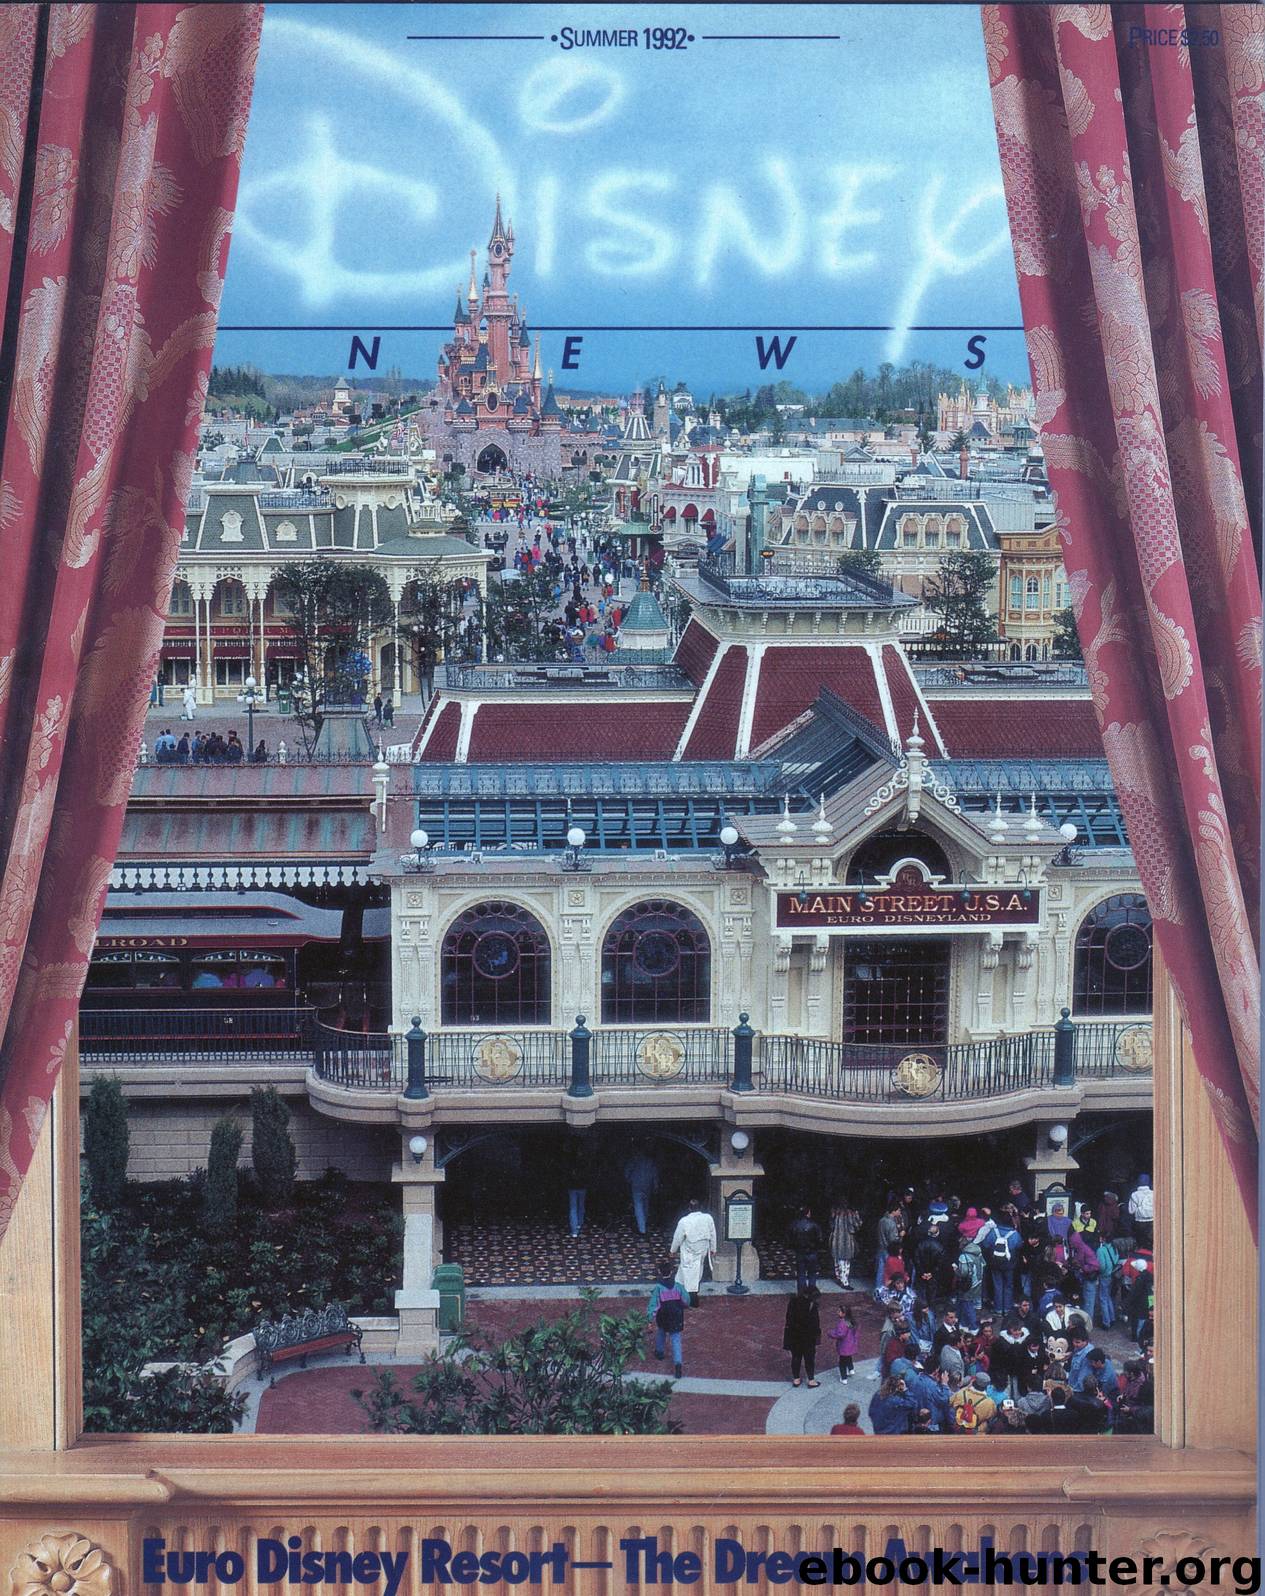 1992 Summer by Disney News Magazine